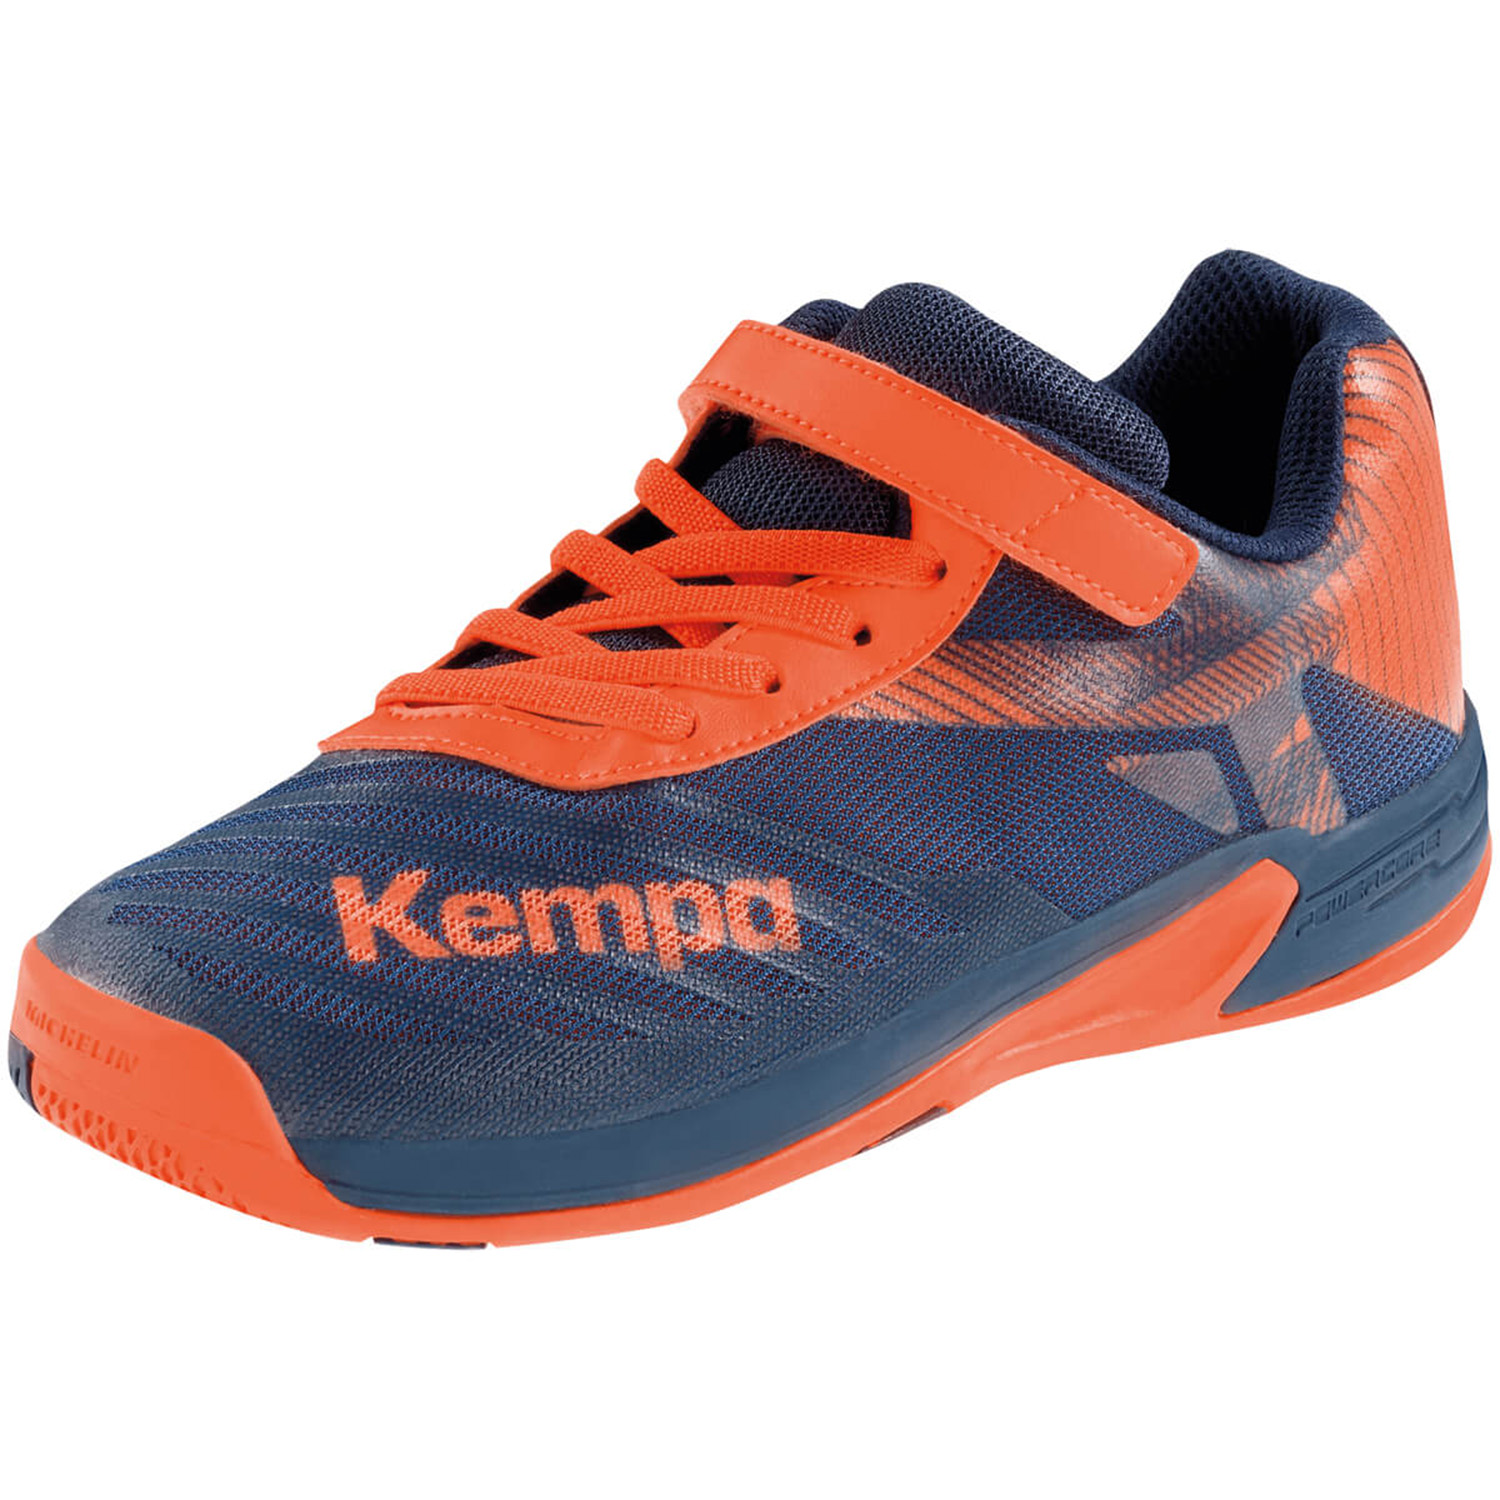 Kempa WING 2.0 Junior Kleinkinder Hallenschuh Handball 200866001 Navy / Orange 